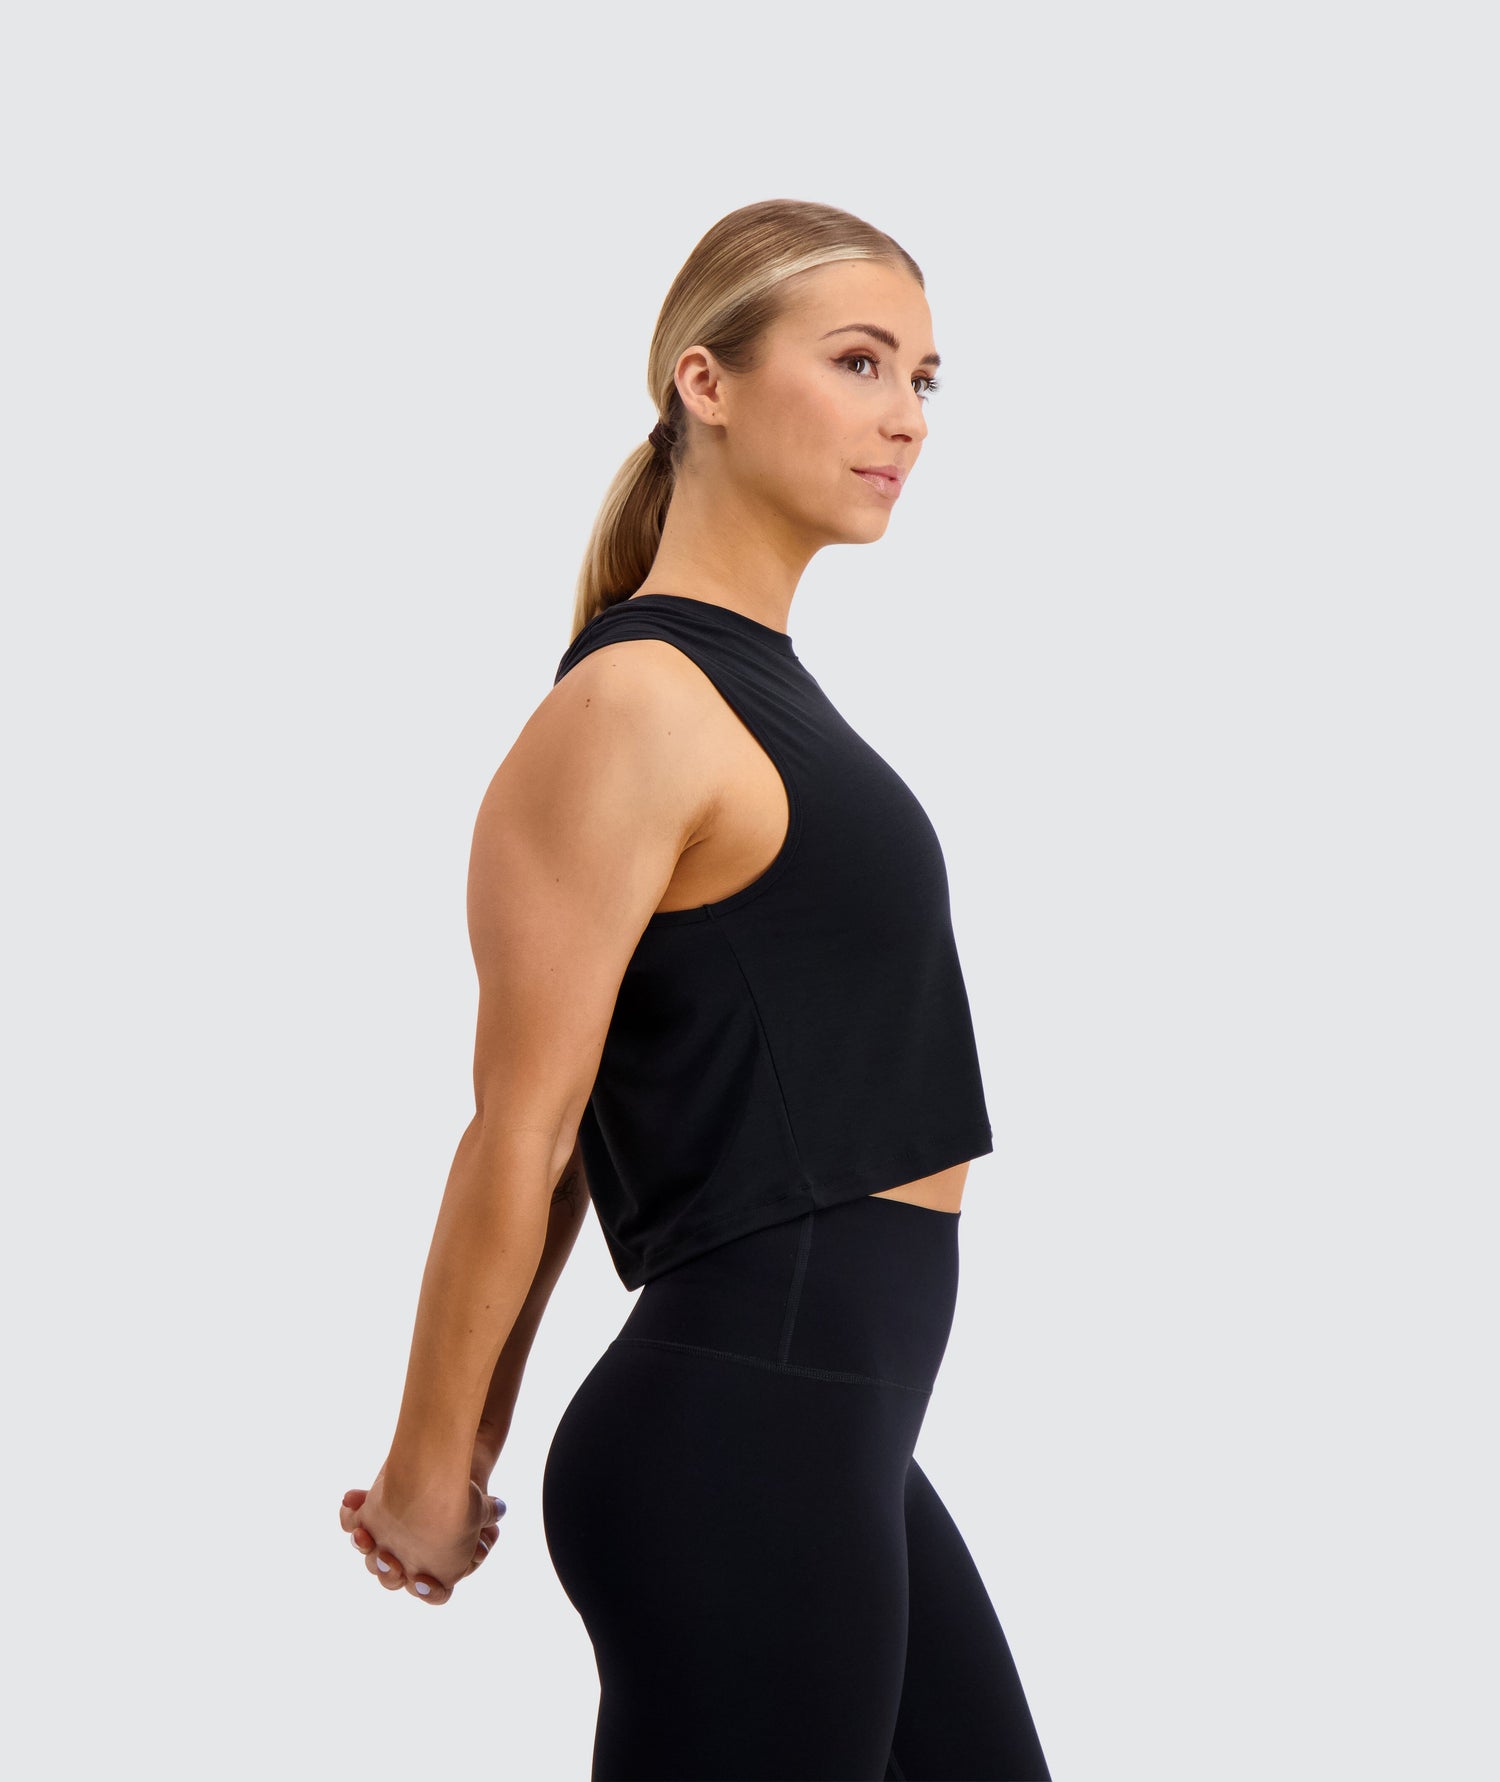 Gymnation W's Muscle Crop Top - OEKO-TEX®-certified material, Tencel & PES Black Shirt